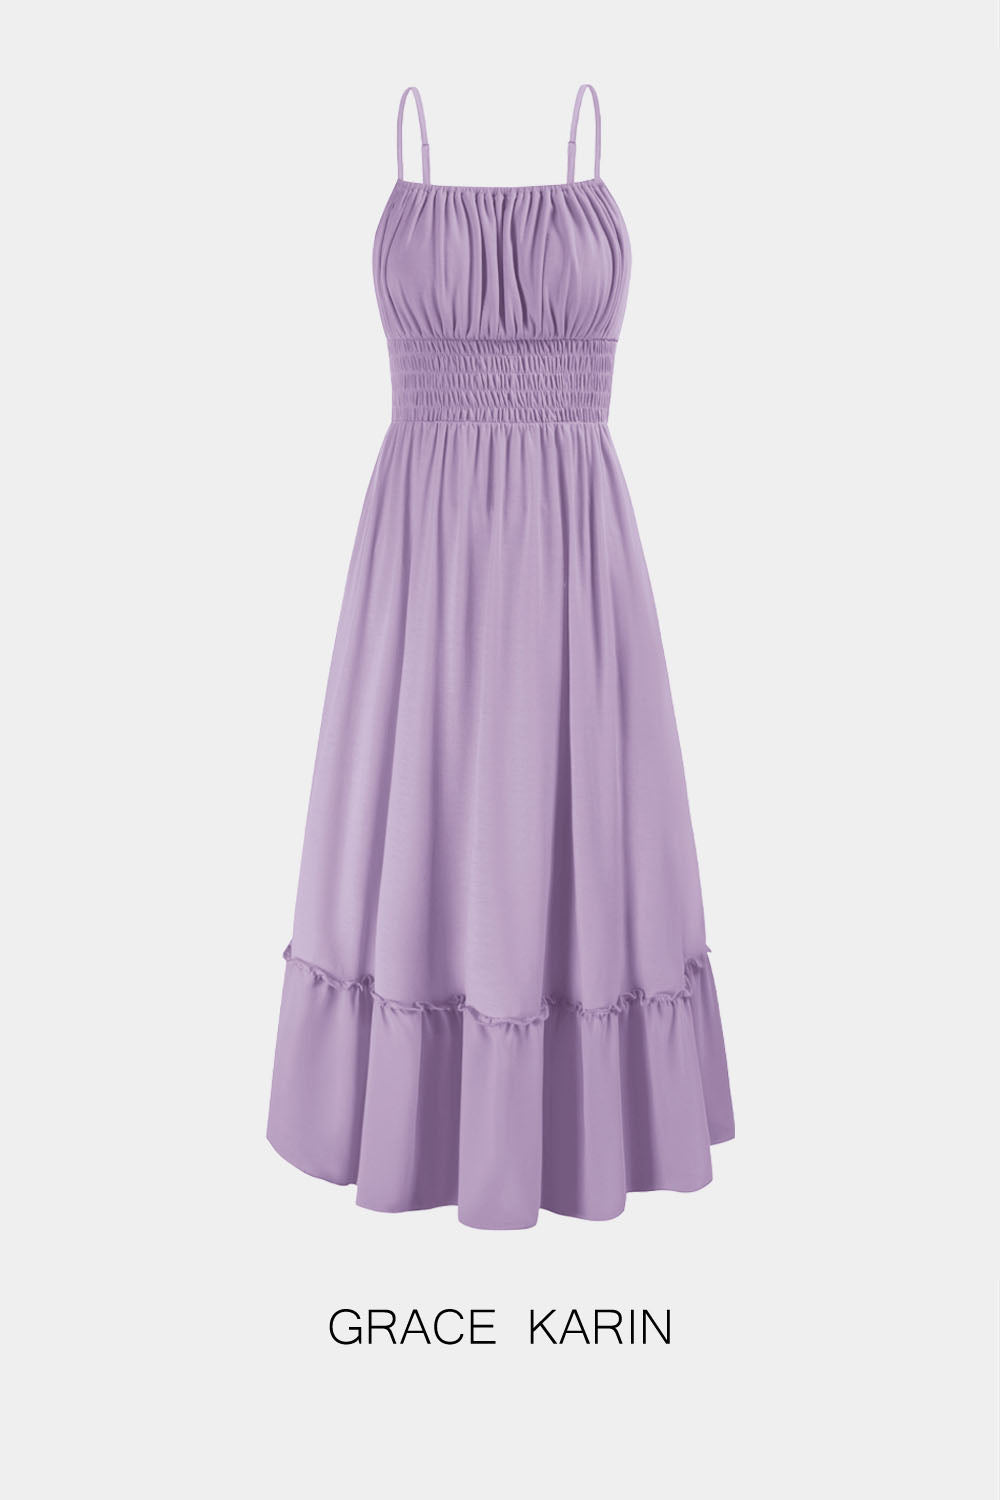 【$19.99 Flash Sale!】GRACE KARIN Maxi Cami Ruched Bodice Smocked Waist Dress